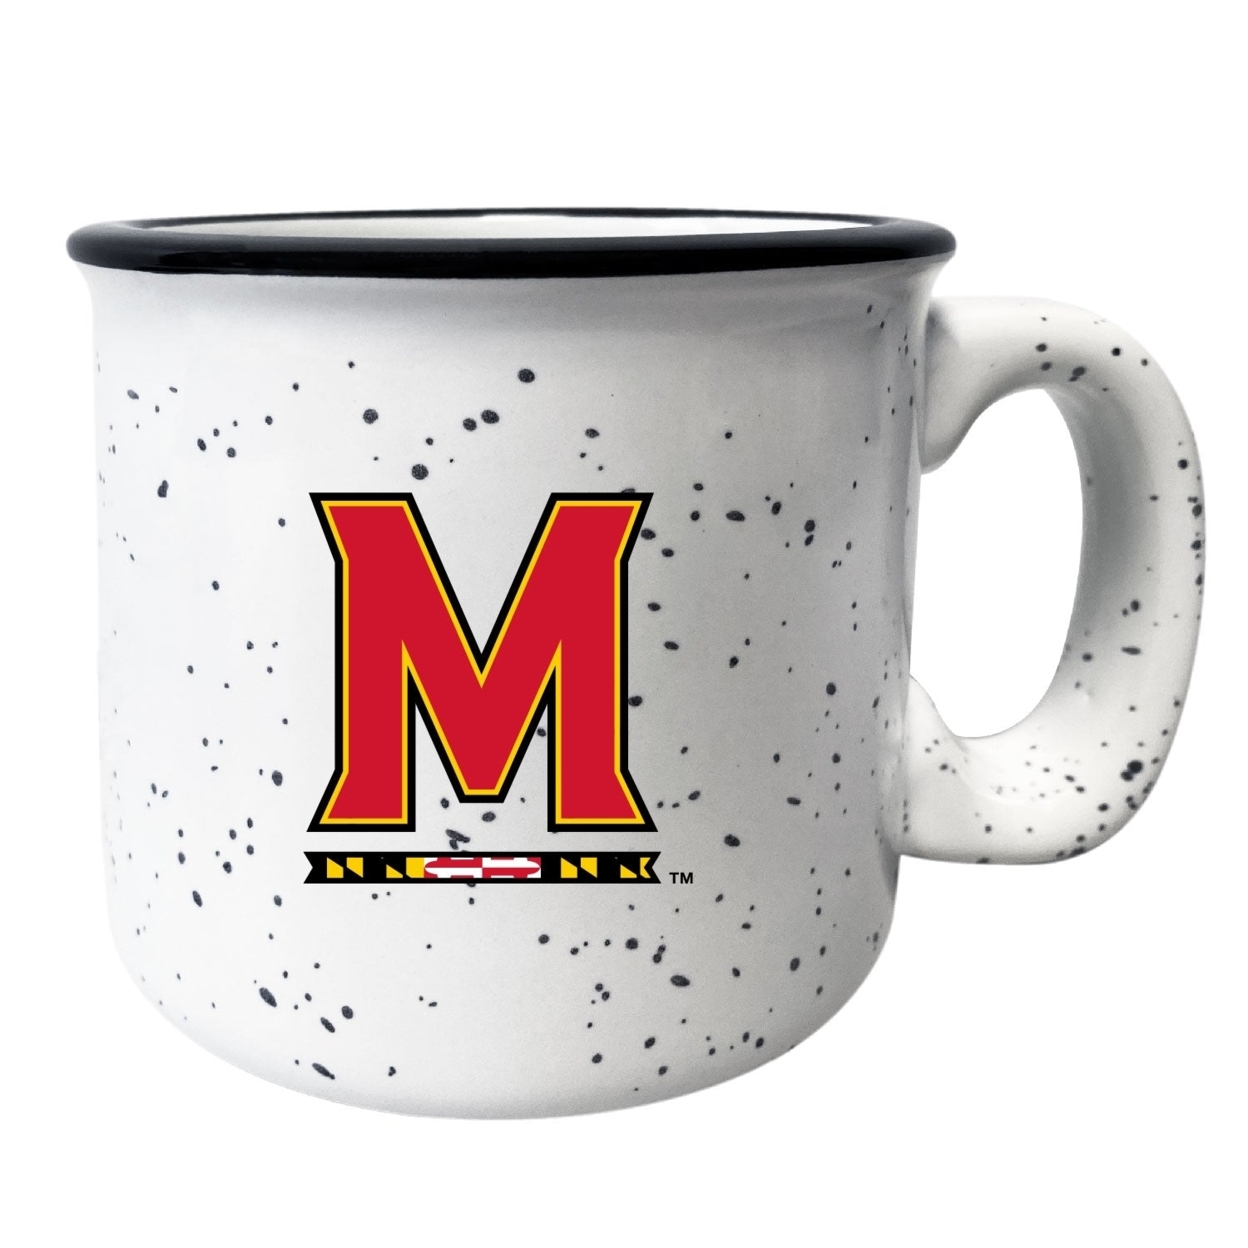 Maryland Terrapins Speckled Ceramic Camper Coffee Mug - Choose Your Color - Navy